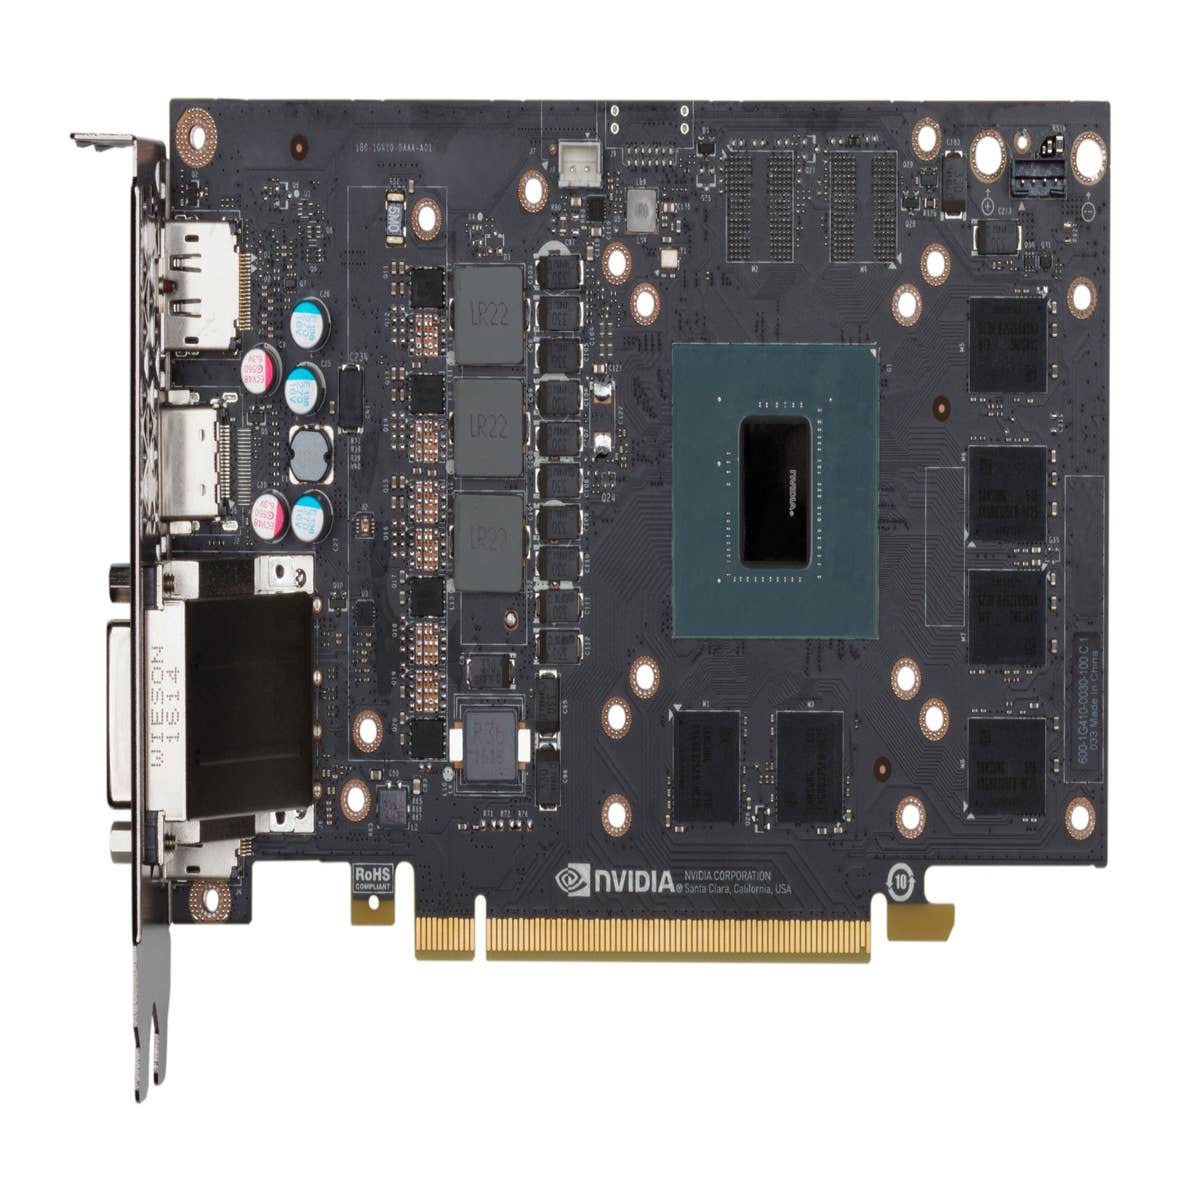 kedel tom tale Nvidia GeForce GTX 1060 3GB vs 6GB review | Eurogamer.net